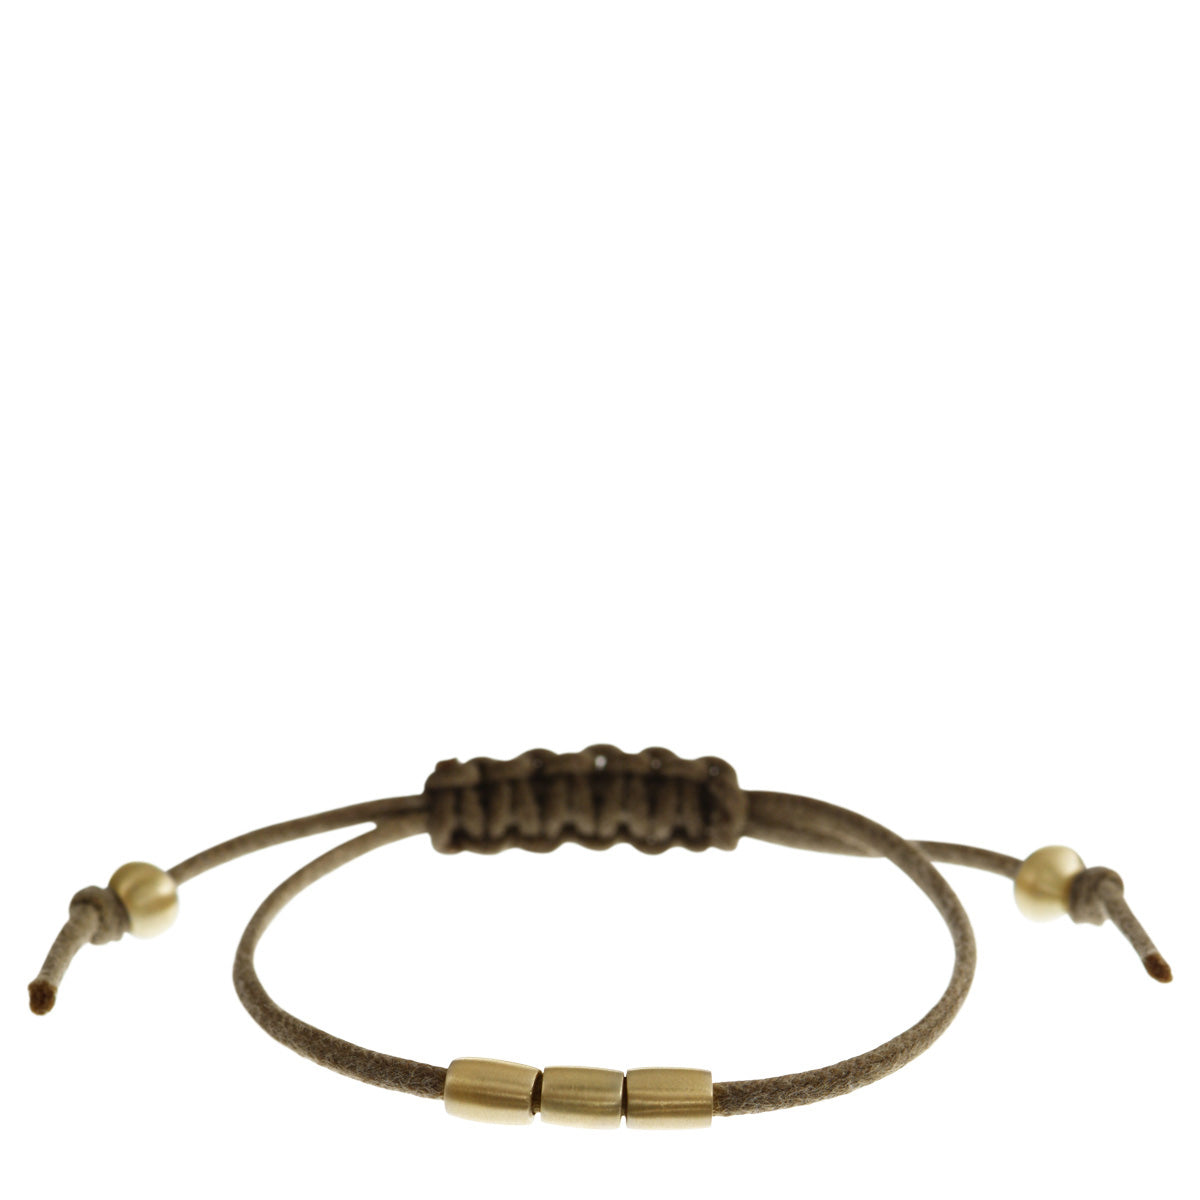 10K Gold 3 Bead Bracelet on Natural Cord